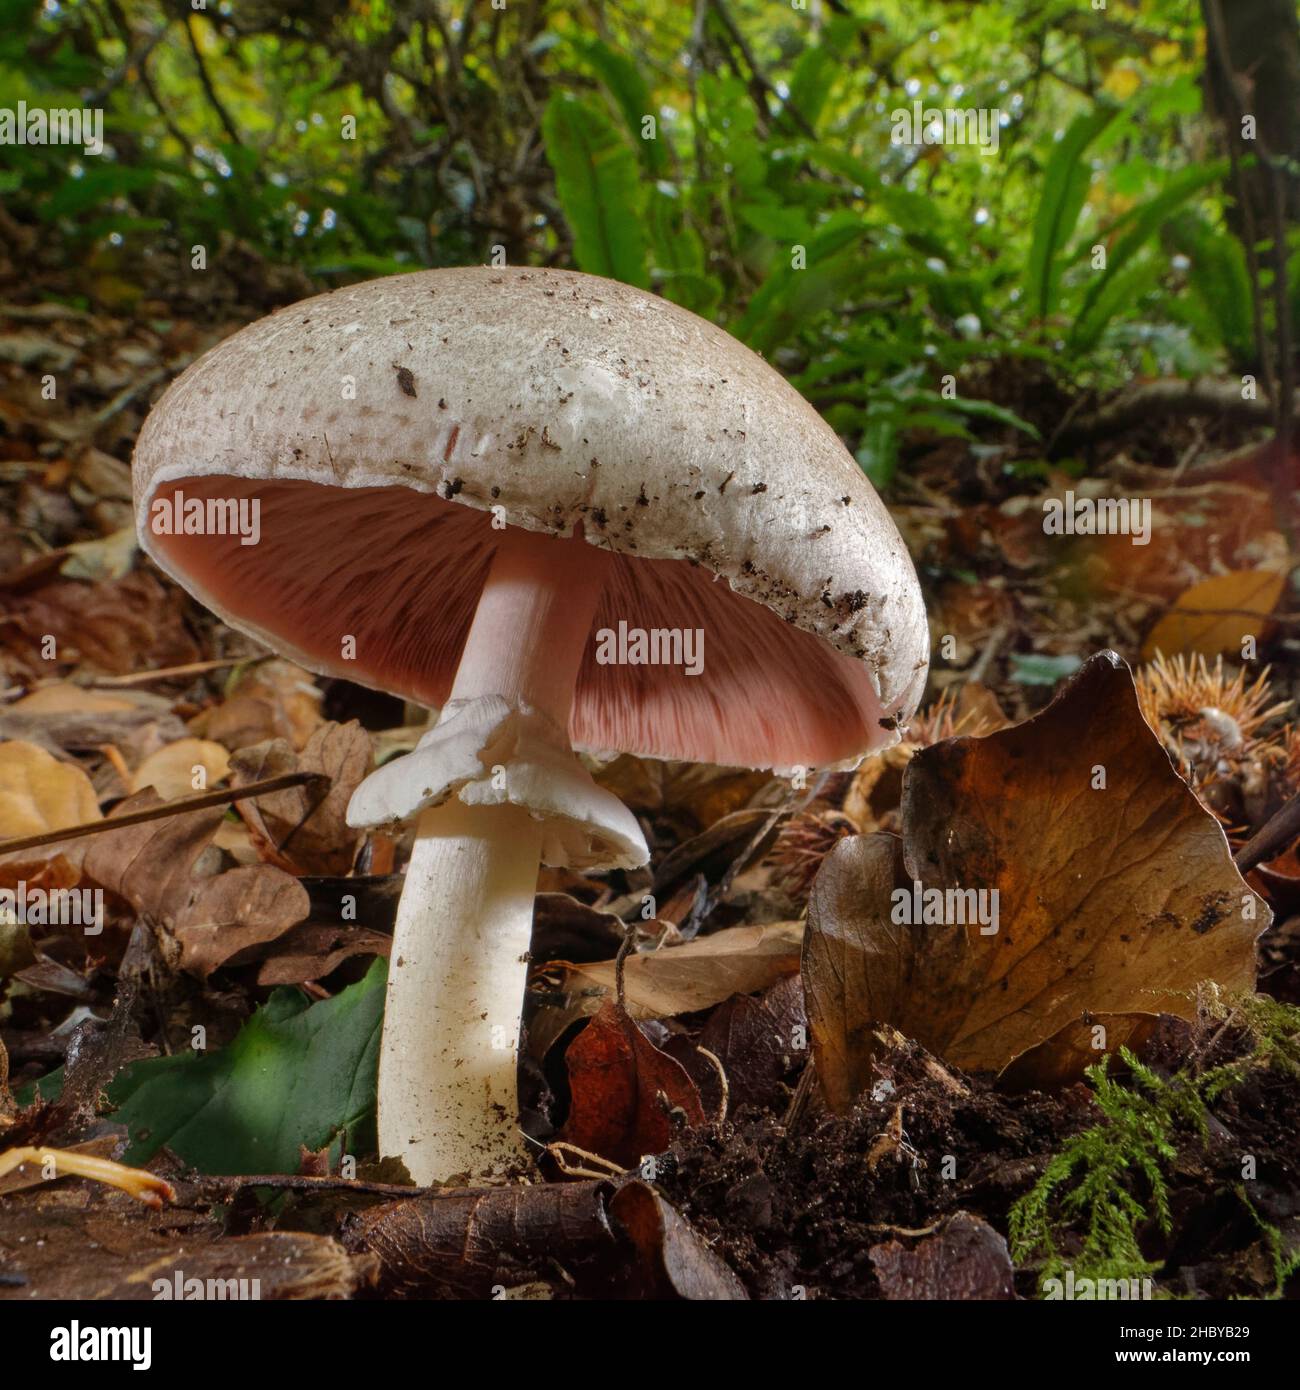 Wood mushroom (Agaricus cf. impudicus) growing among leaf litter in deciduous woodland, Merthyr Mawr, Wales, UK, October. Stock Photo